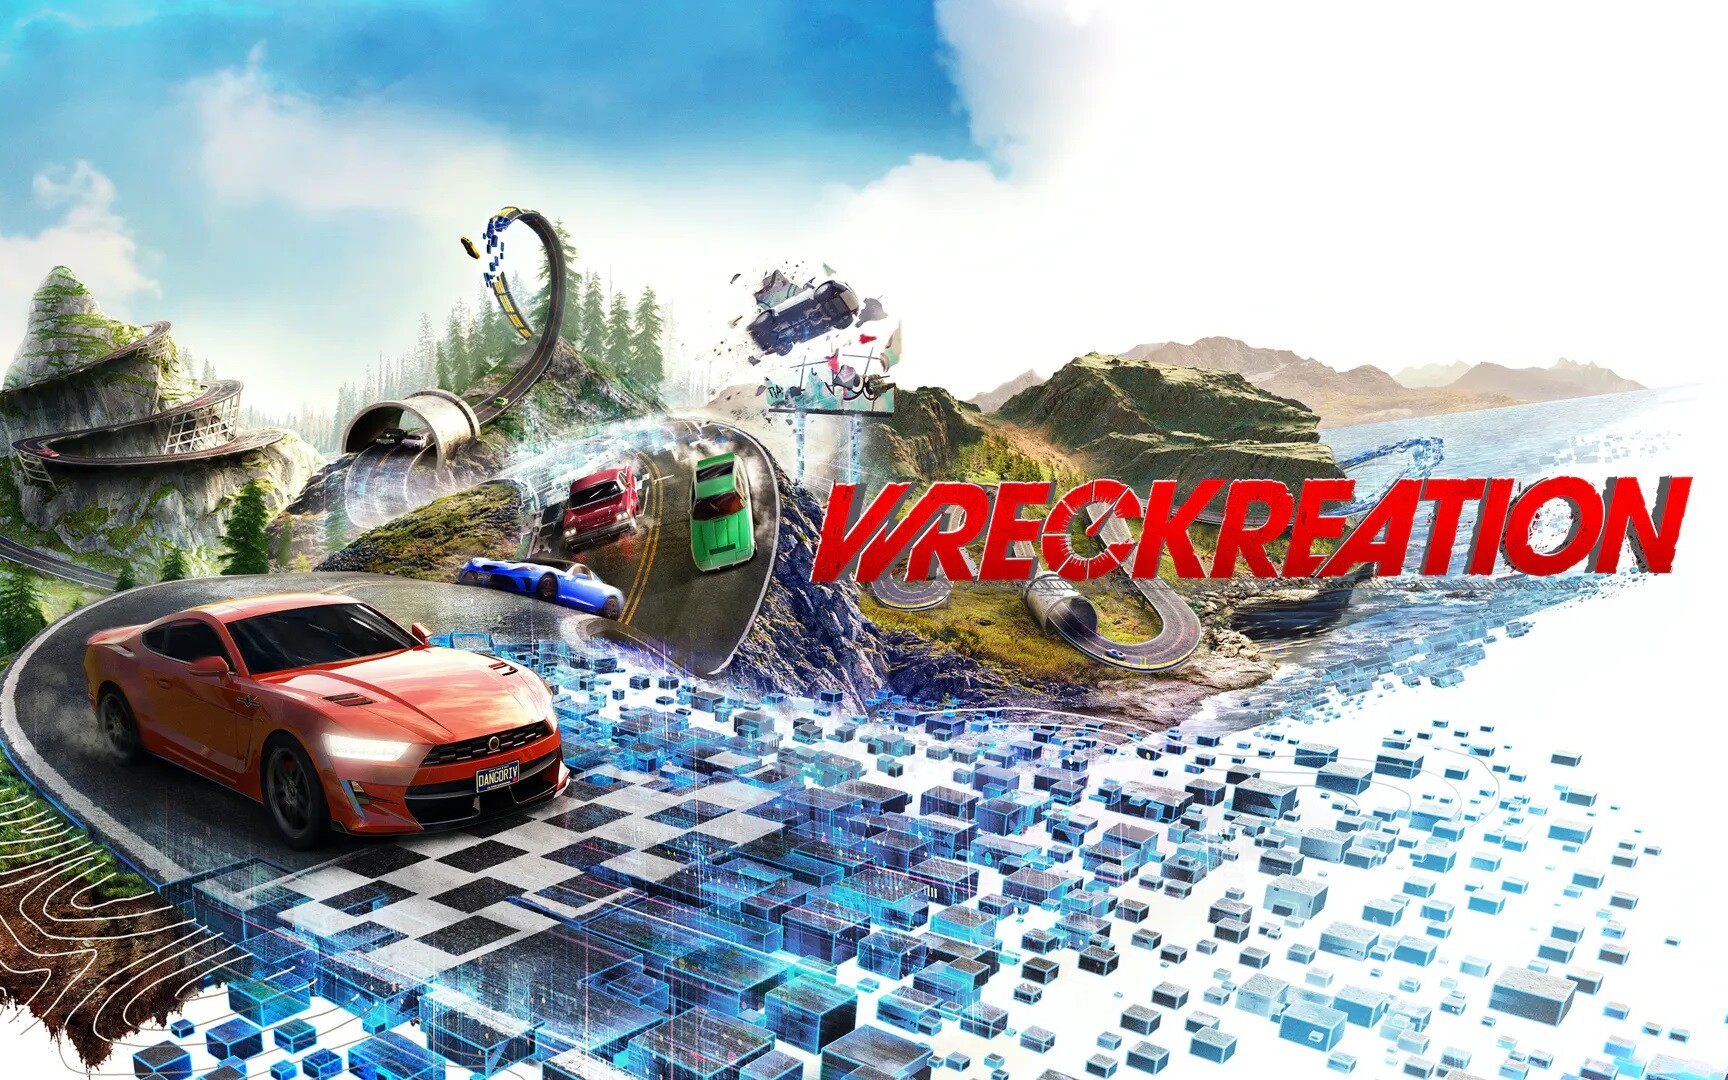 Wreckreation_key-art